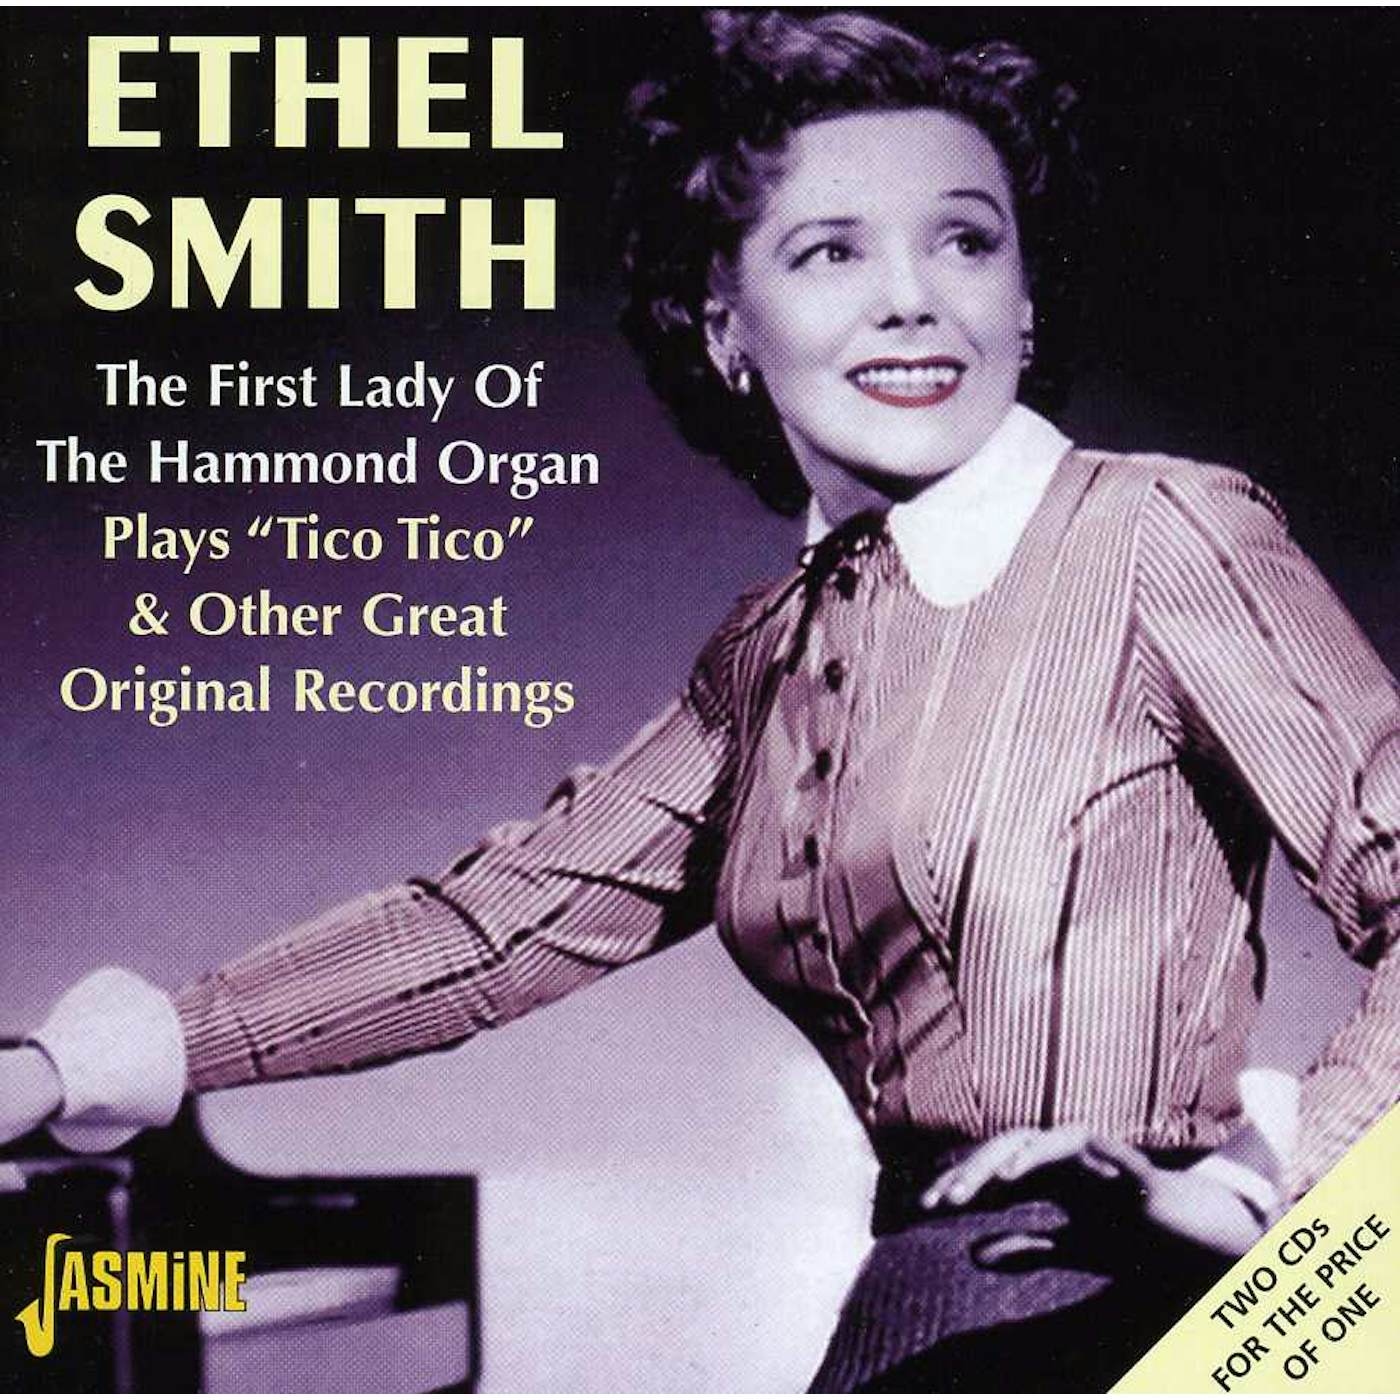 Ethel Smith FIRST LADY OF THE HAMMOND ORGAN: PLAYS TICO TICO CD